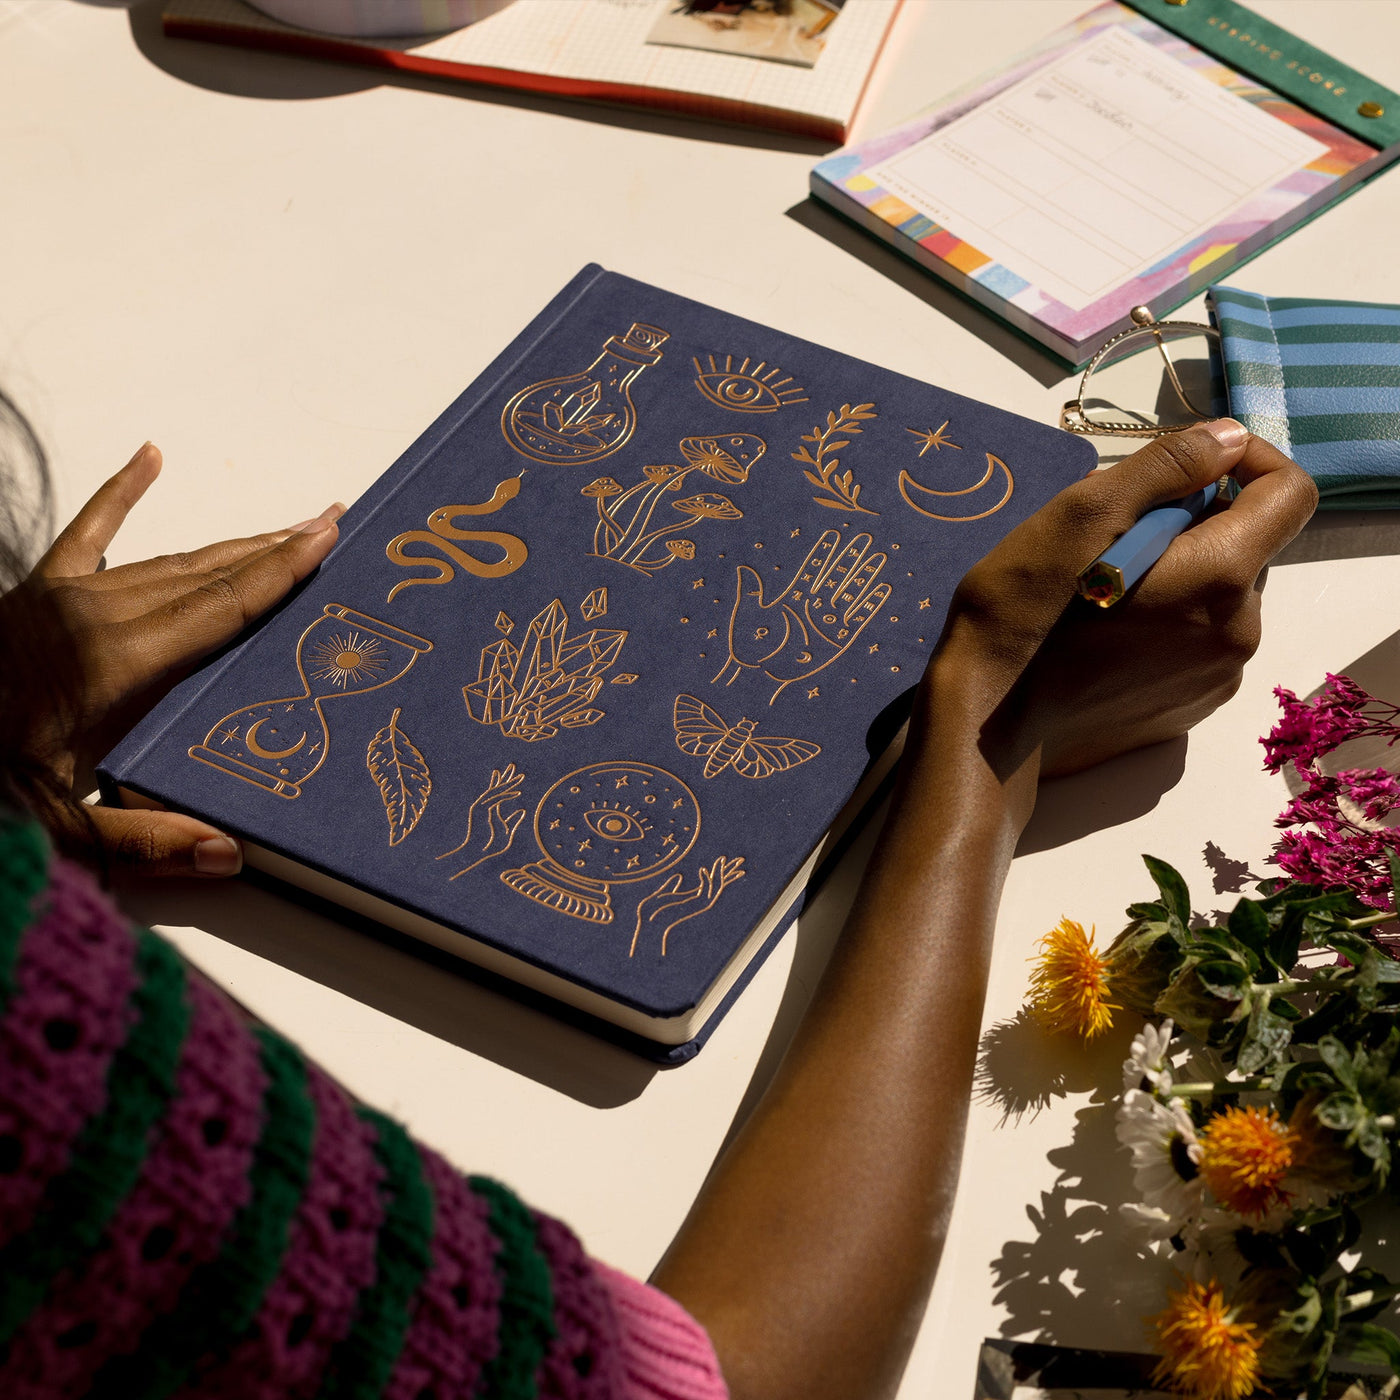 Jumbo Bookcloth Journal - Mystic Icons